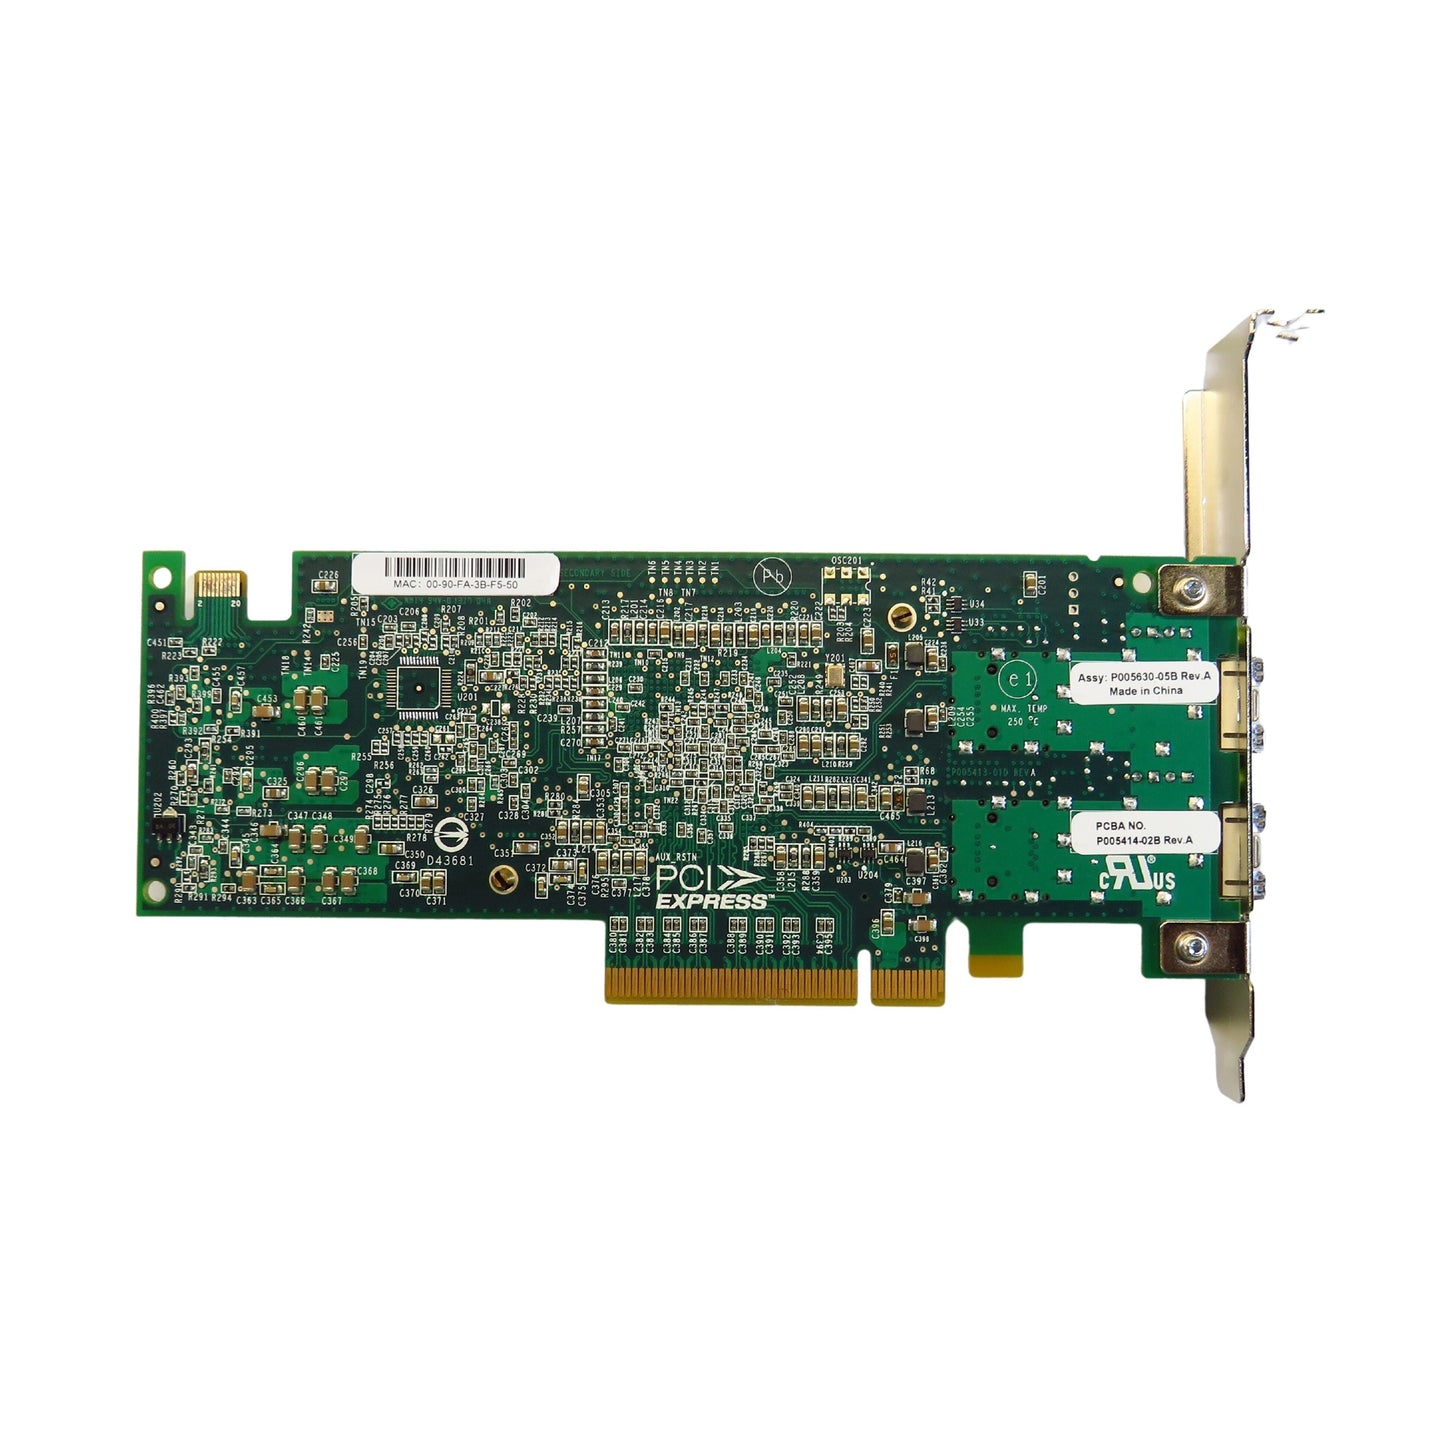 Lenovo 49Y7952 49Y7951 2 Port 10Gbps FC SFP PCIe Virtual Fabric Adapter Card (Refurbished)